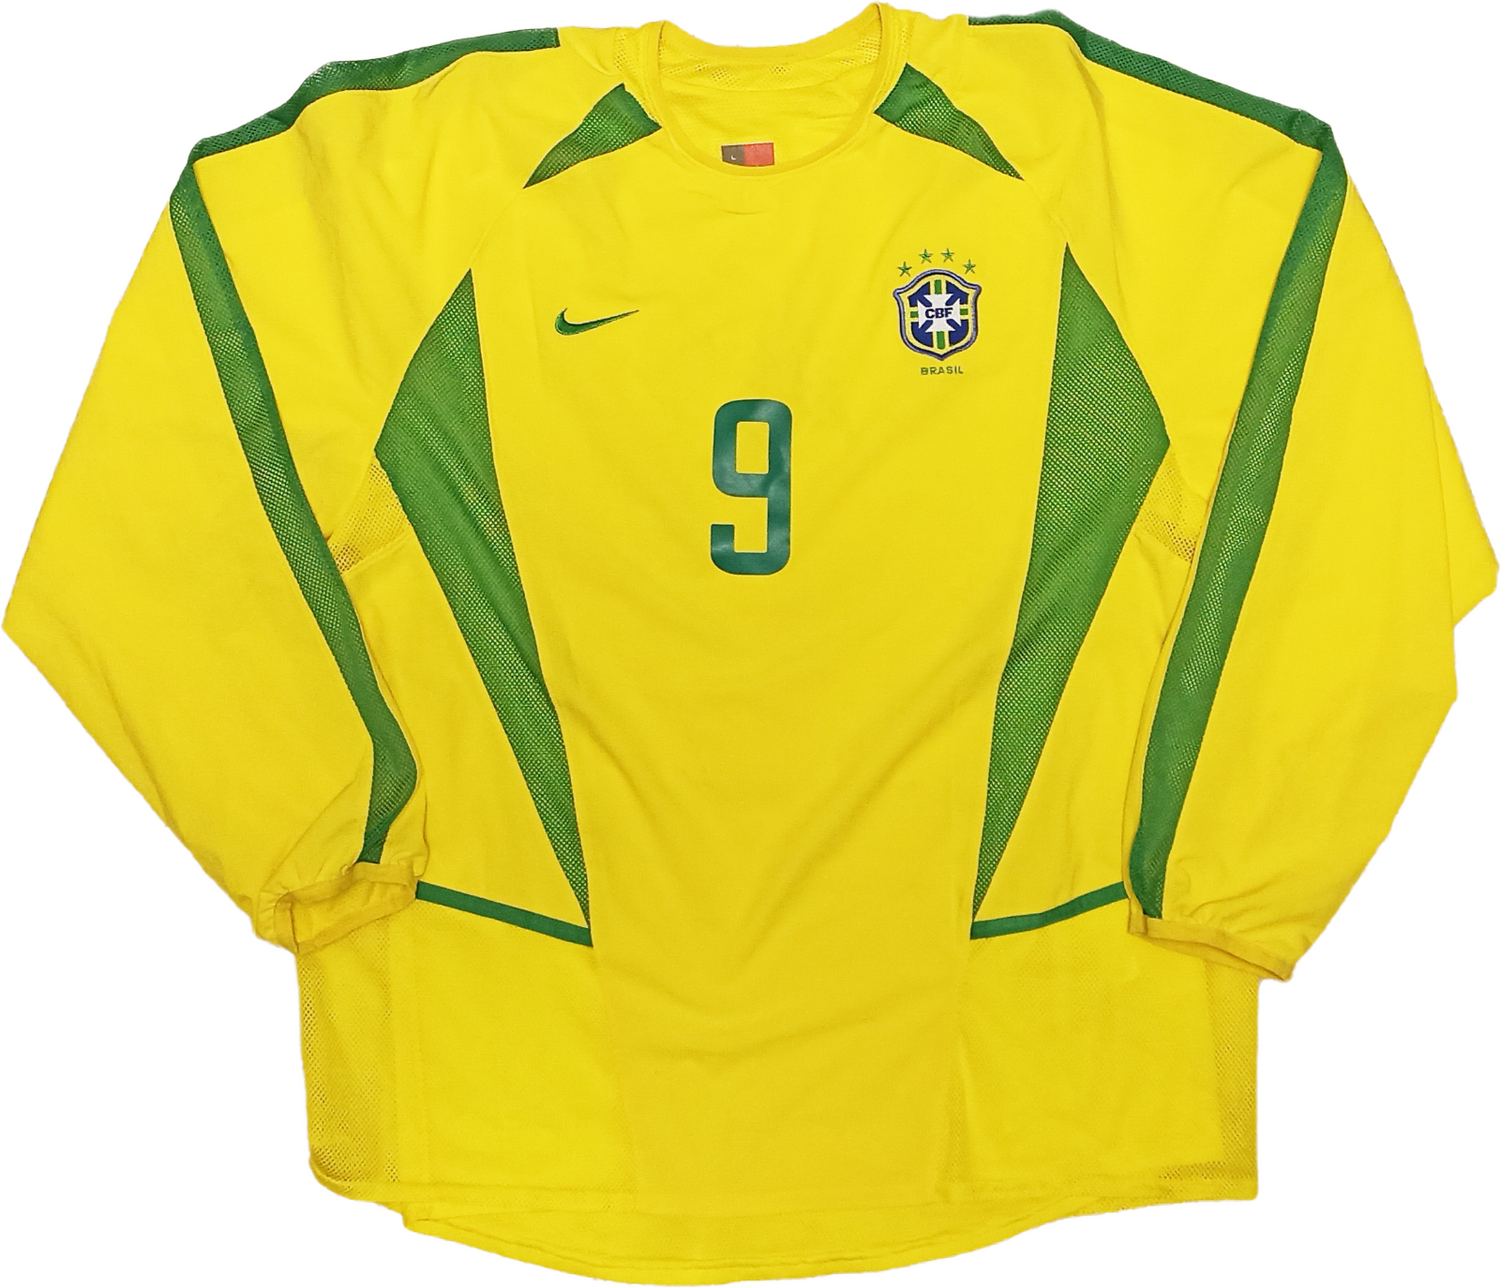 Nike Brazil 2002 FIFA World Cup Soccer Jersey Medium